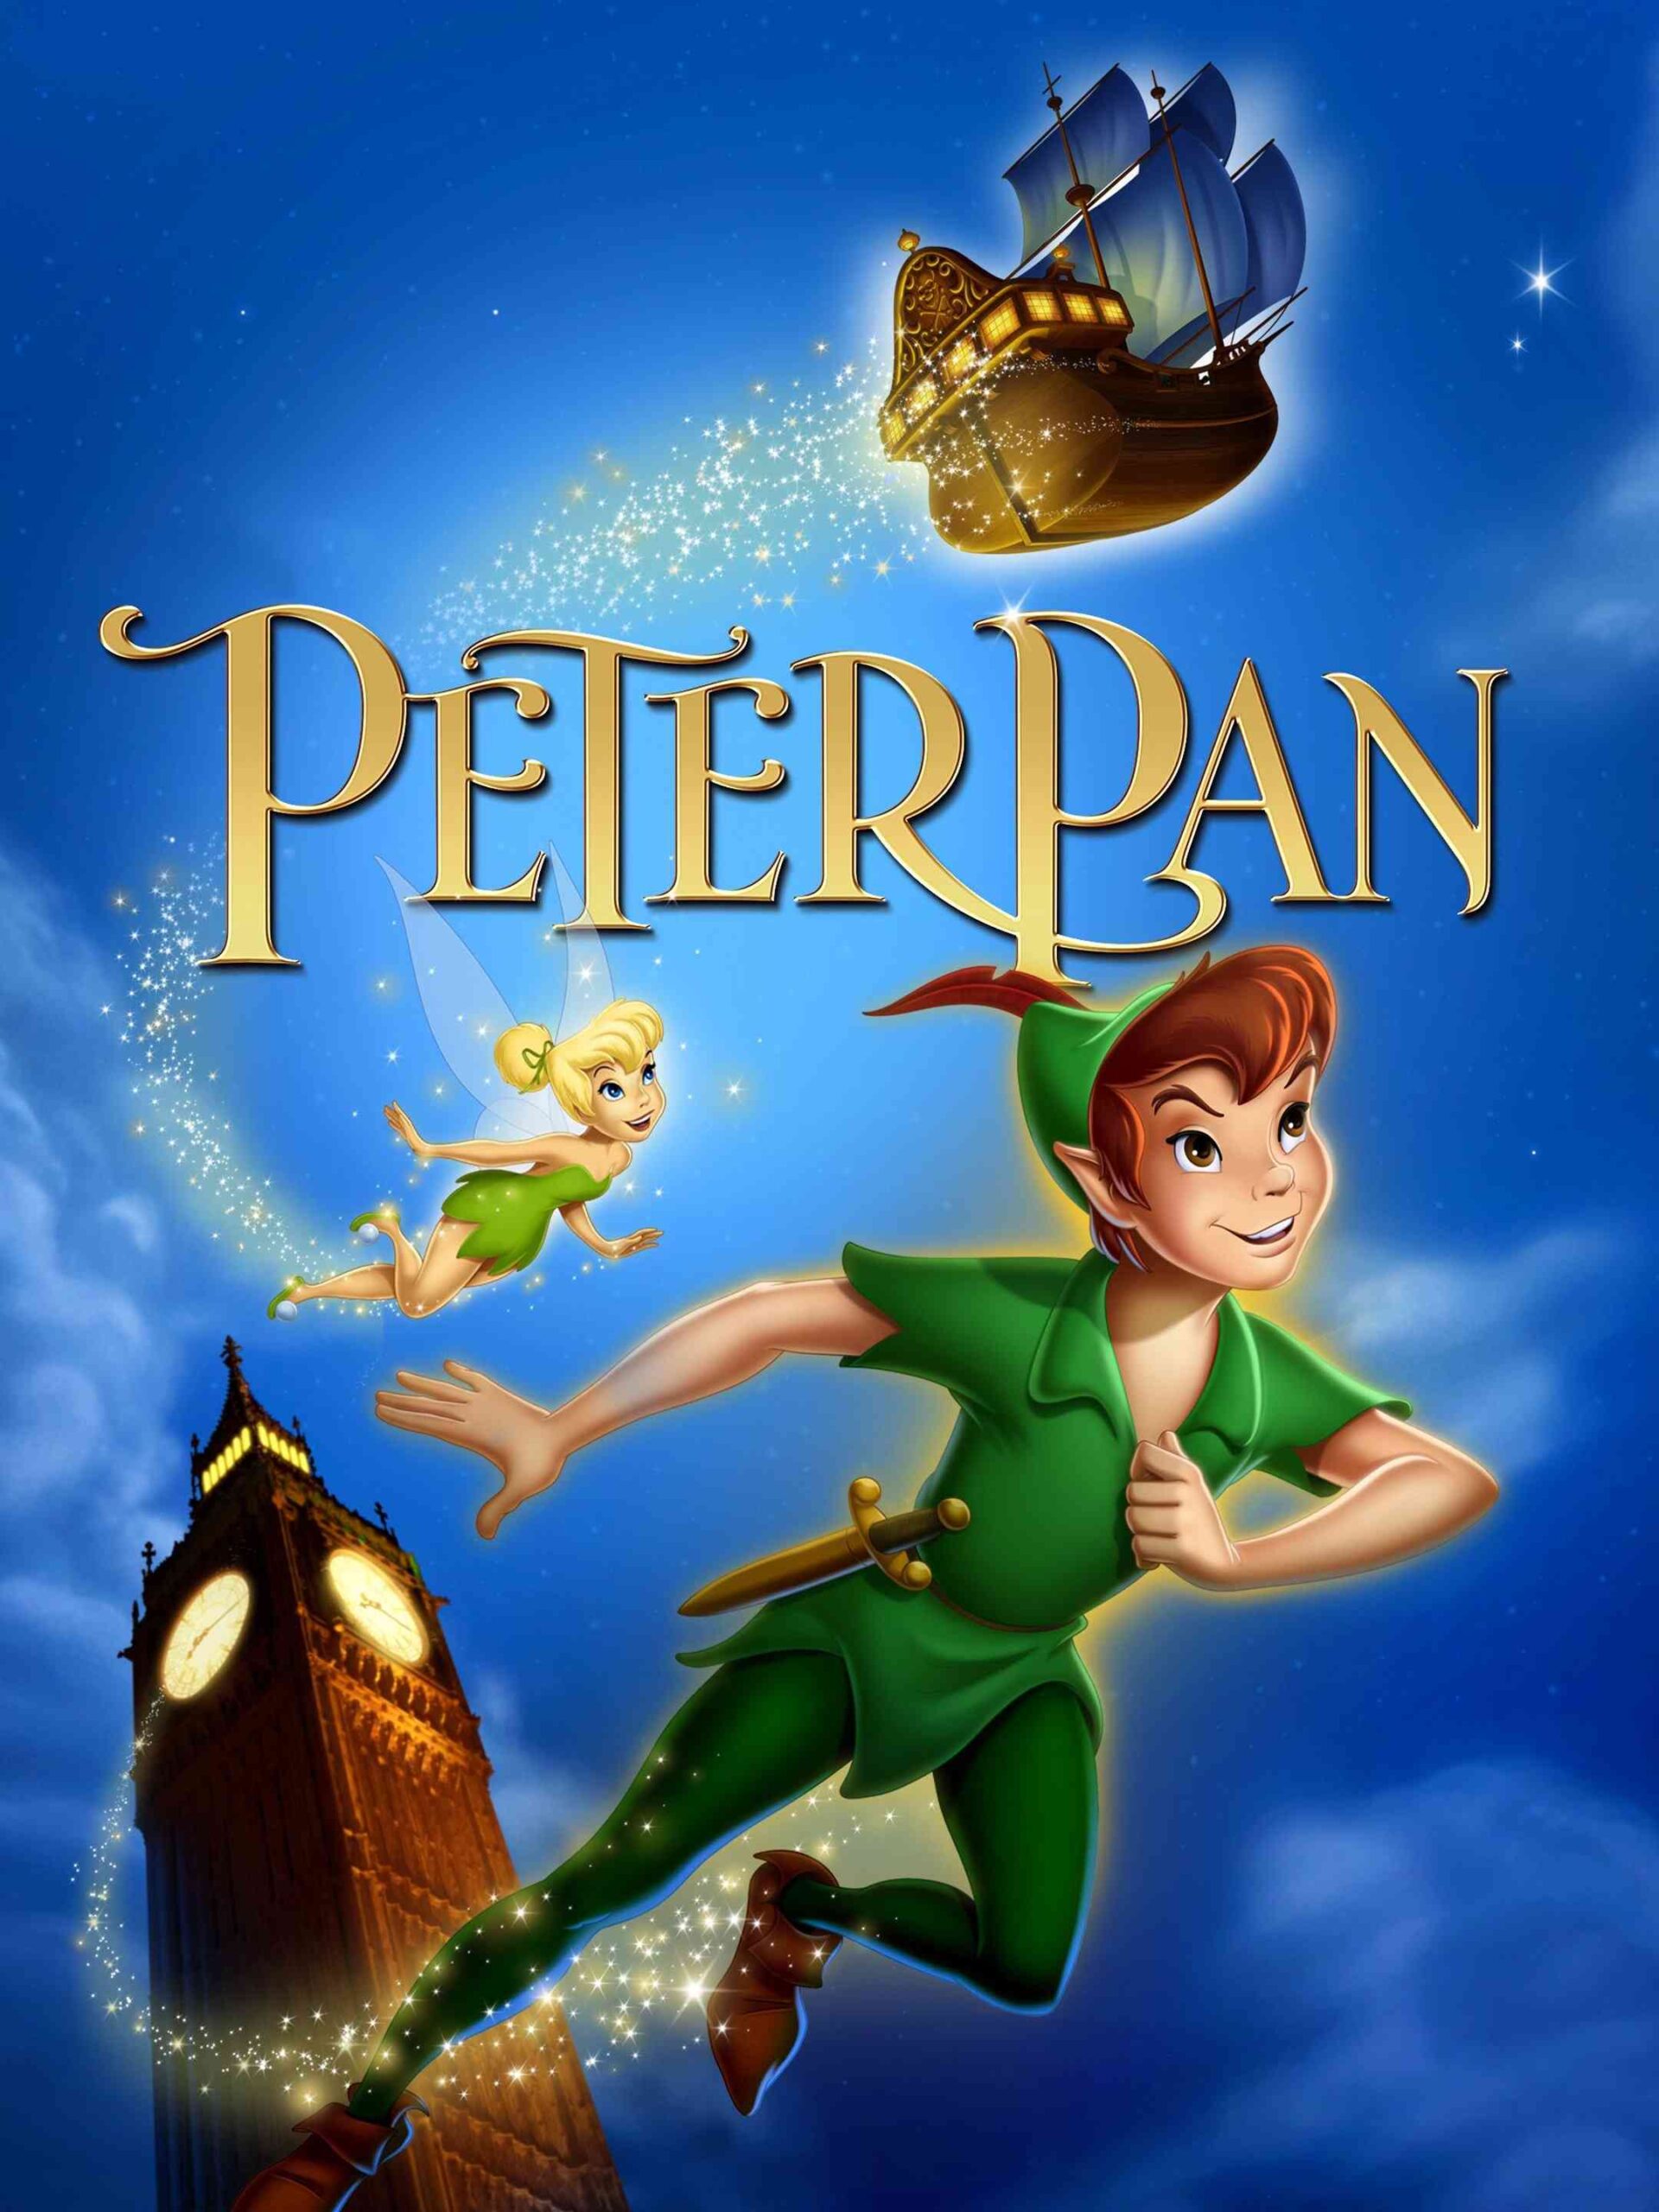 FULL MOVIE: Peter Pan (1953) [Animation]